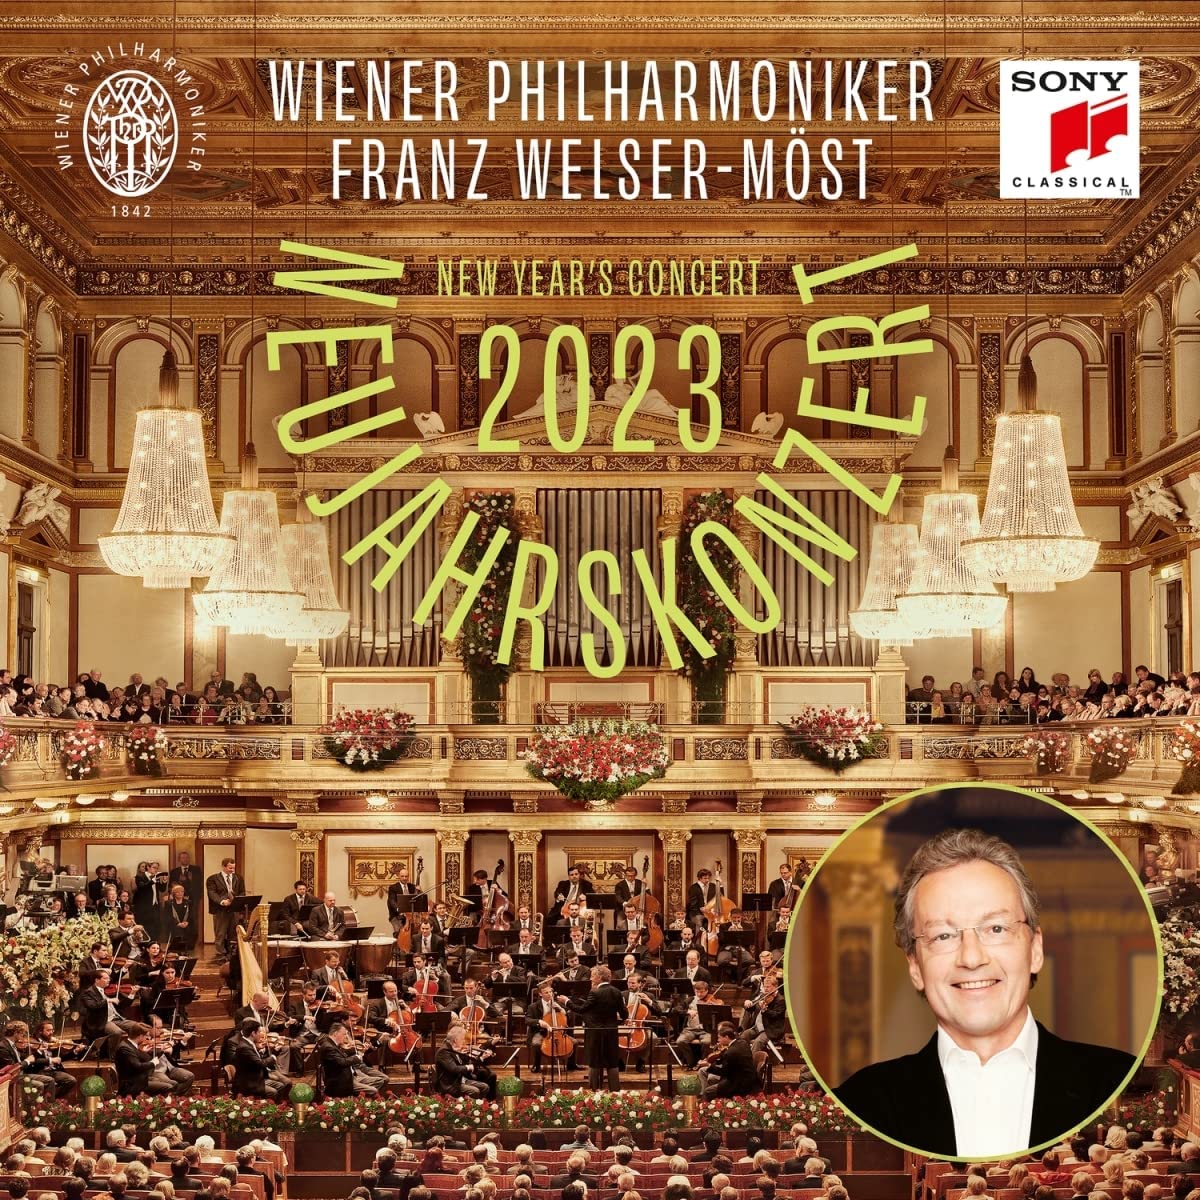 Neujahrskonzert – New Year’s Concert 2023 | Wiener Philharmoniker, Franz Welser-Most 2023: poza noua